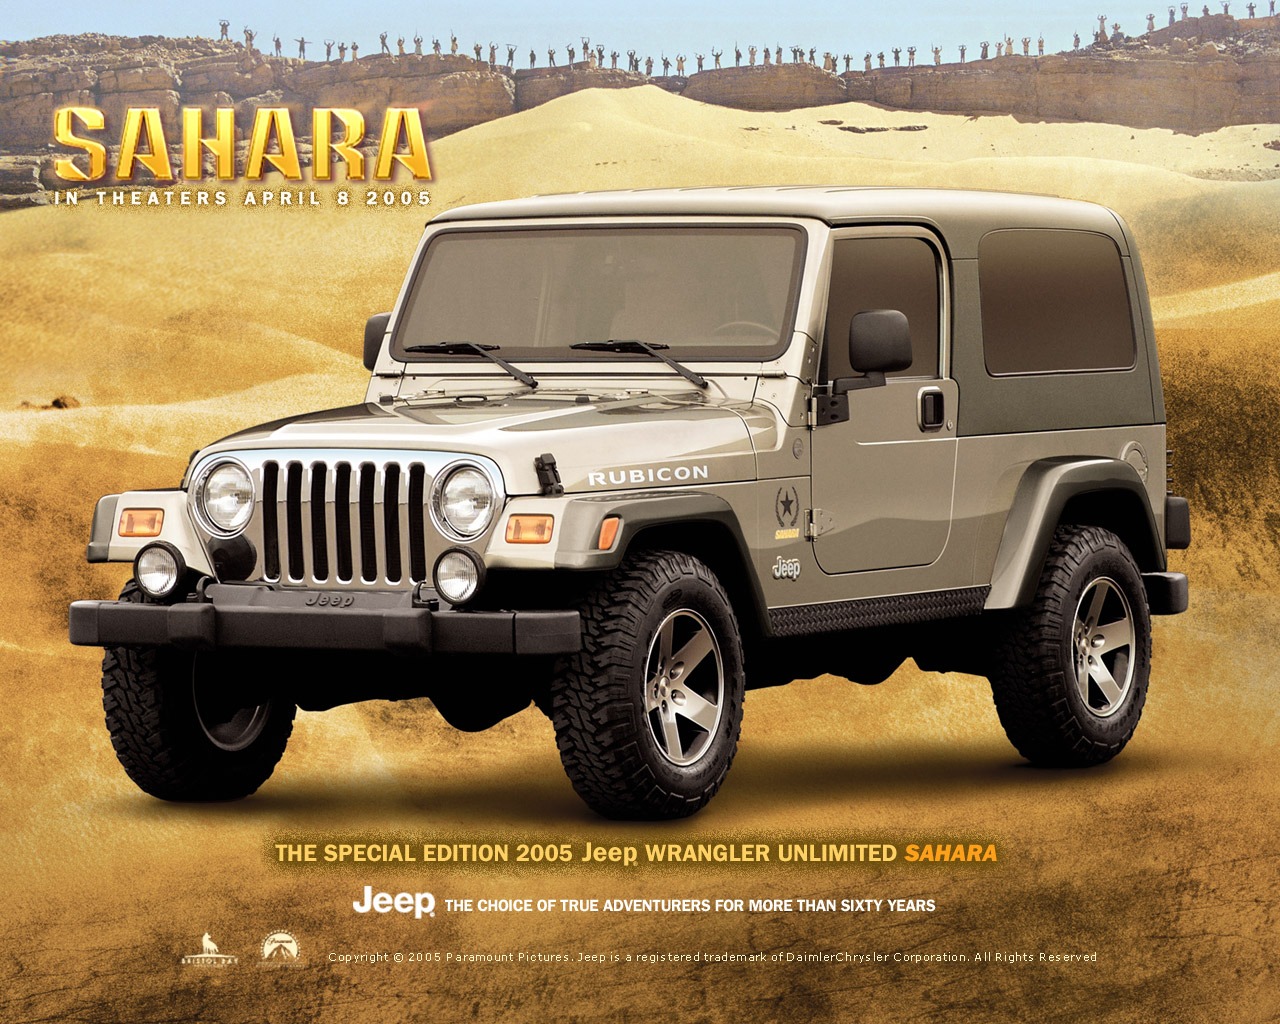 2003 Jeep Wrangler Rubicon Tomb Raider Edition 14k Miles Jeep Wrangler Tj Forum